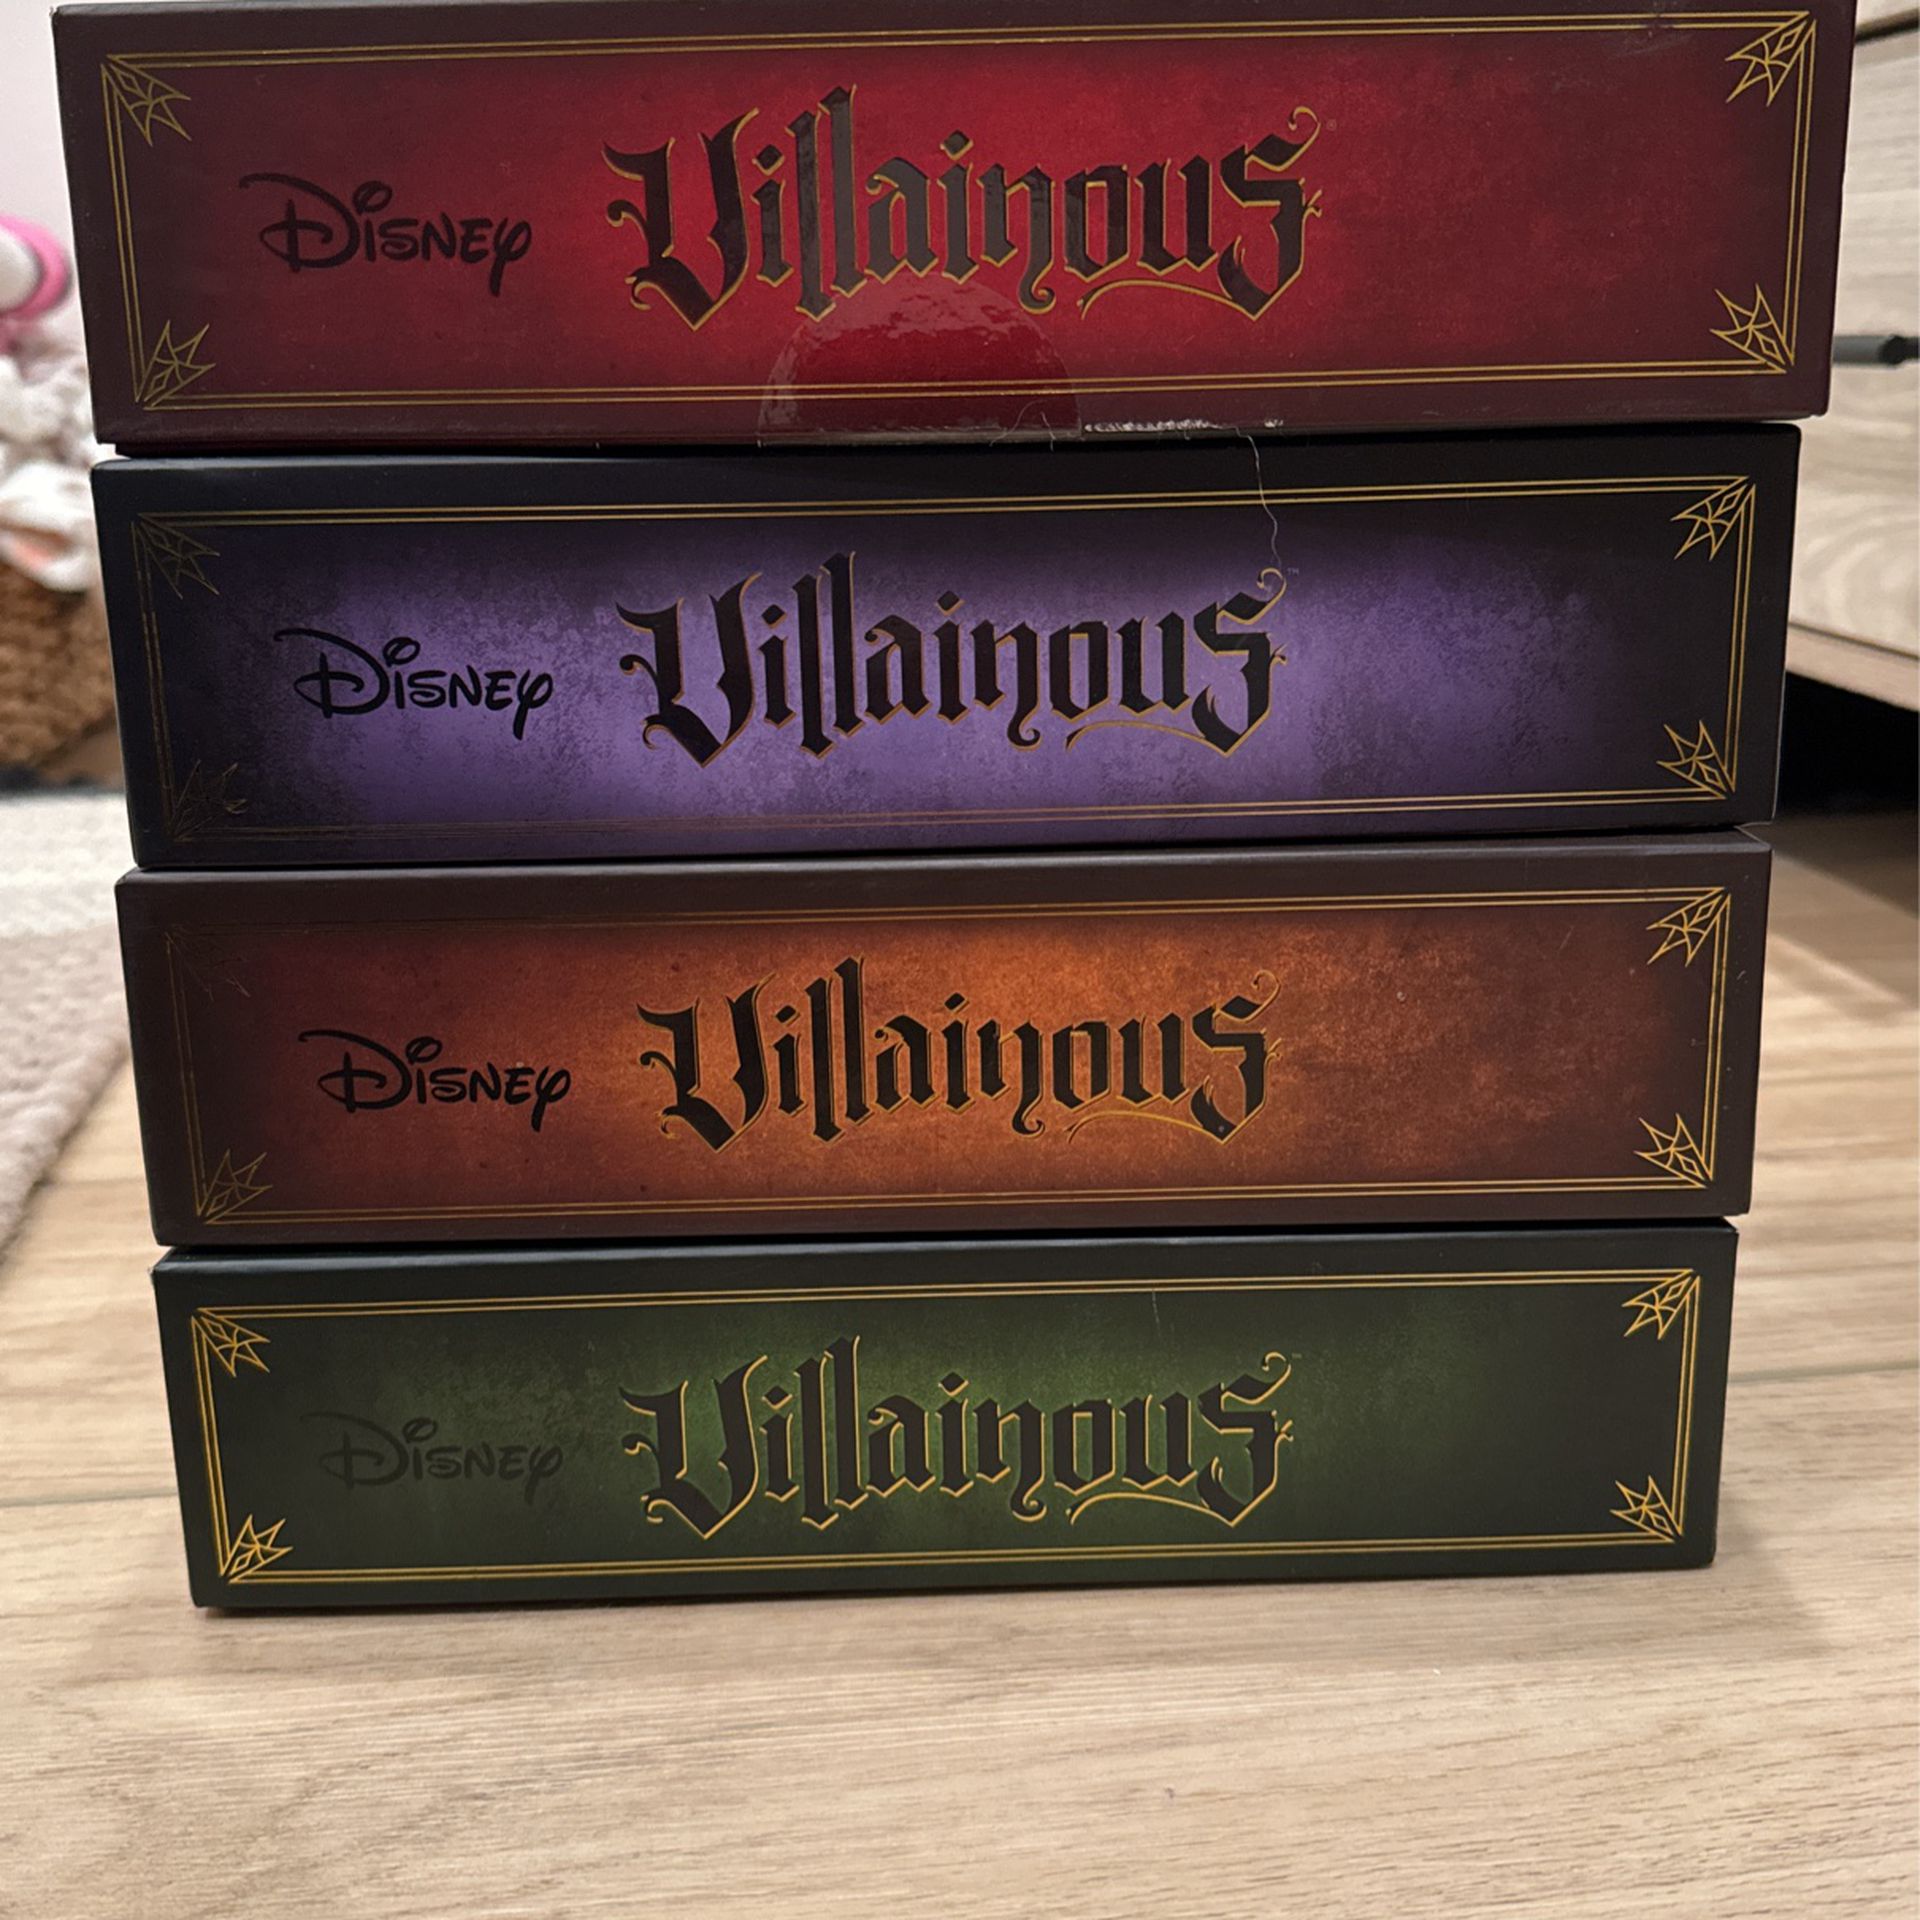 Disney Villainous Board Games - 4 Pack